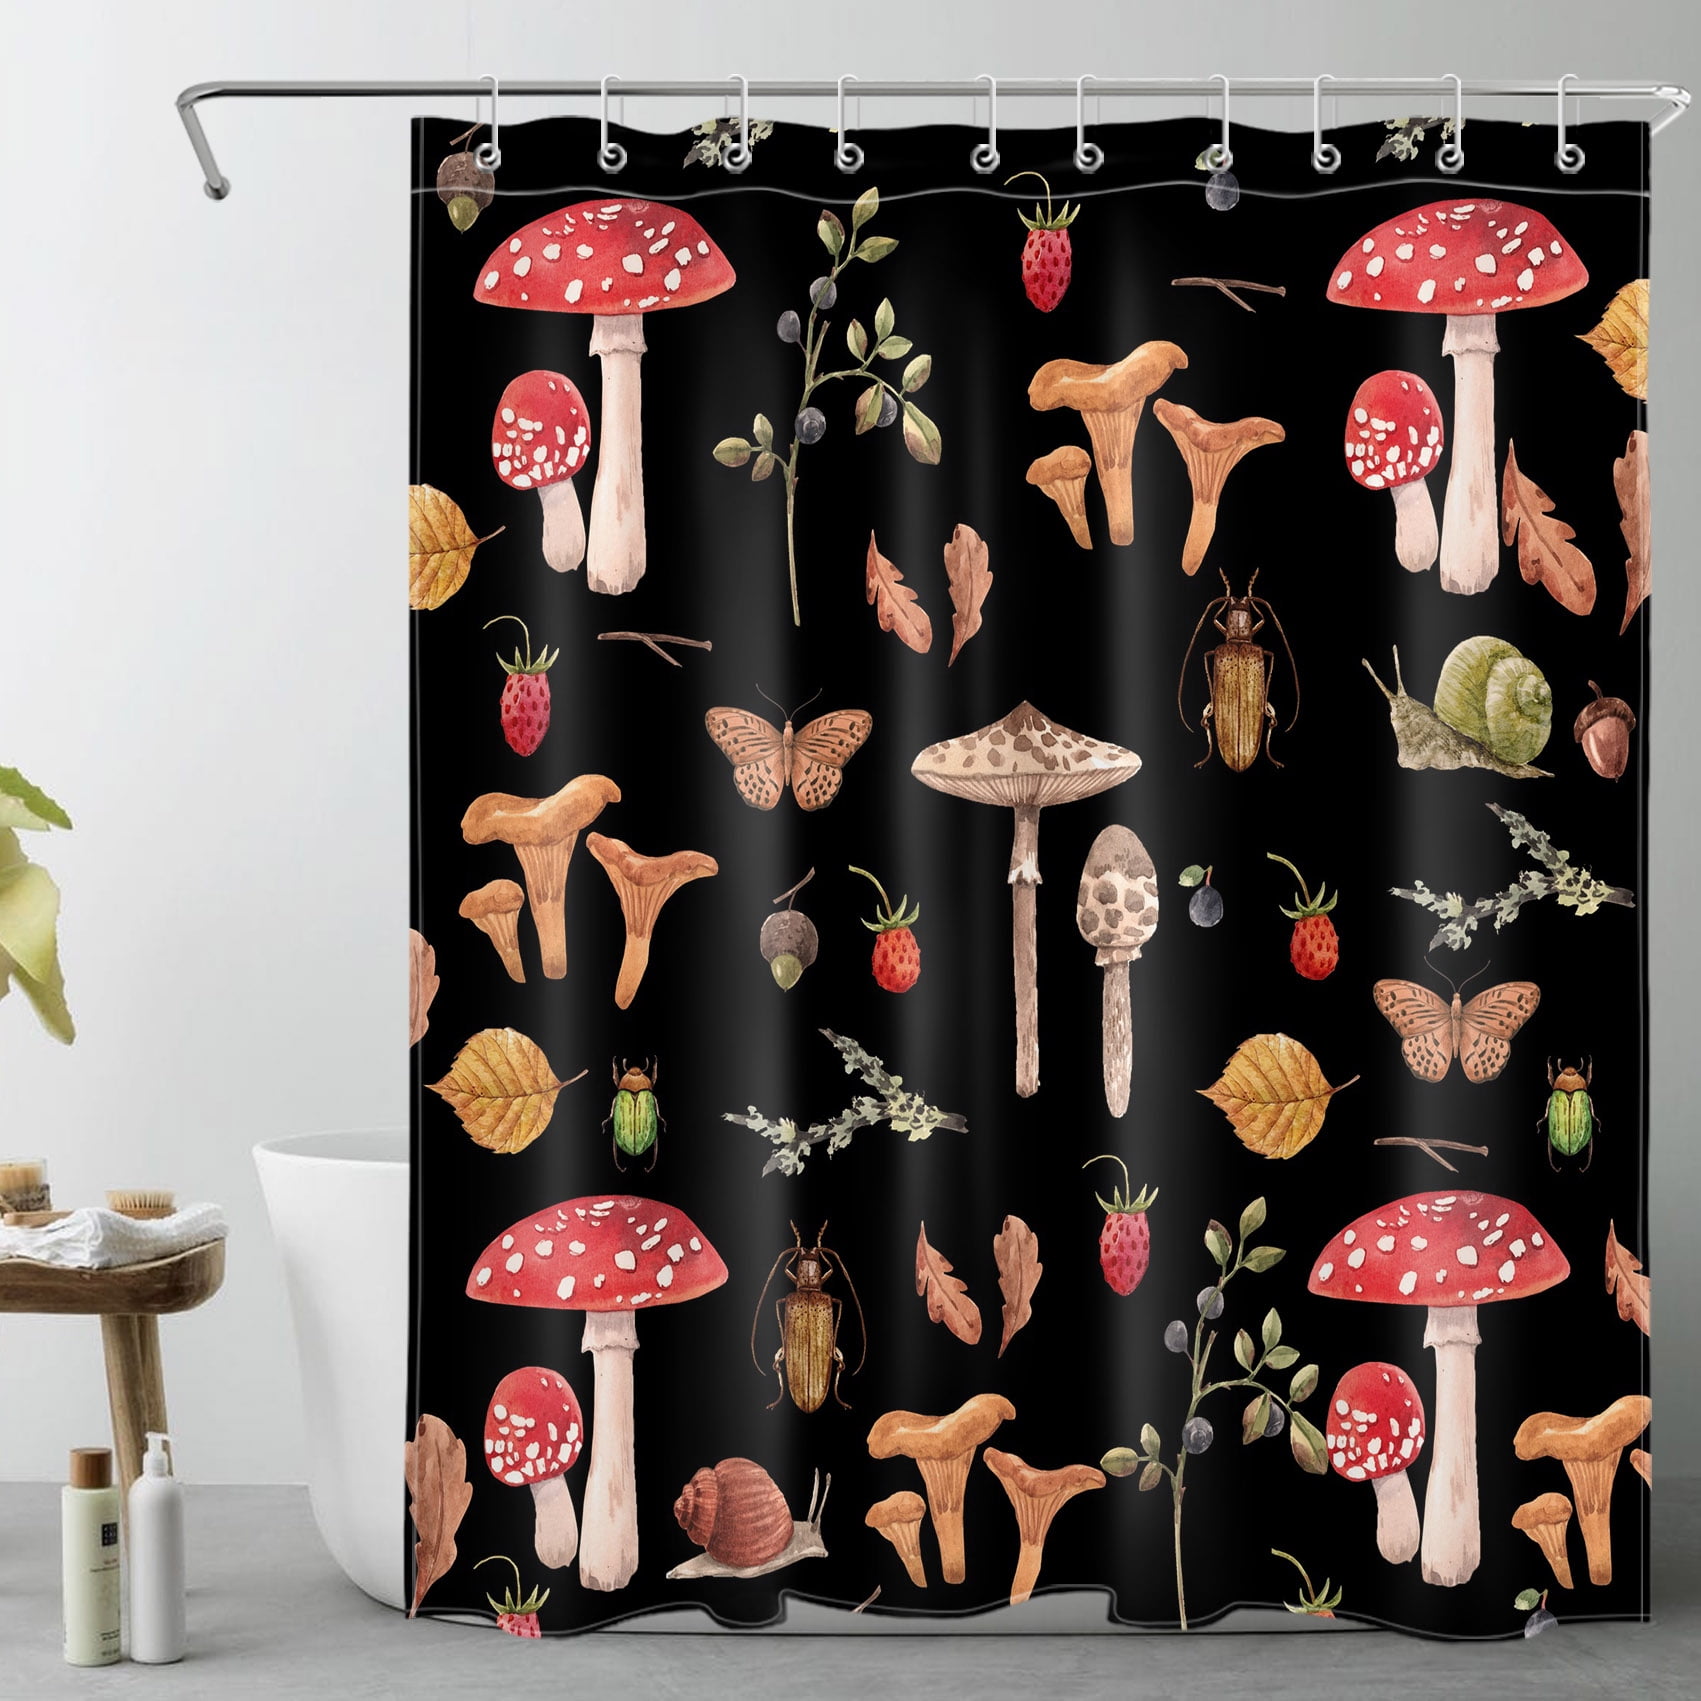 Mushrooms Shower Curtain - TatYeShop